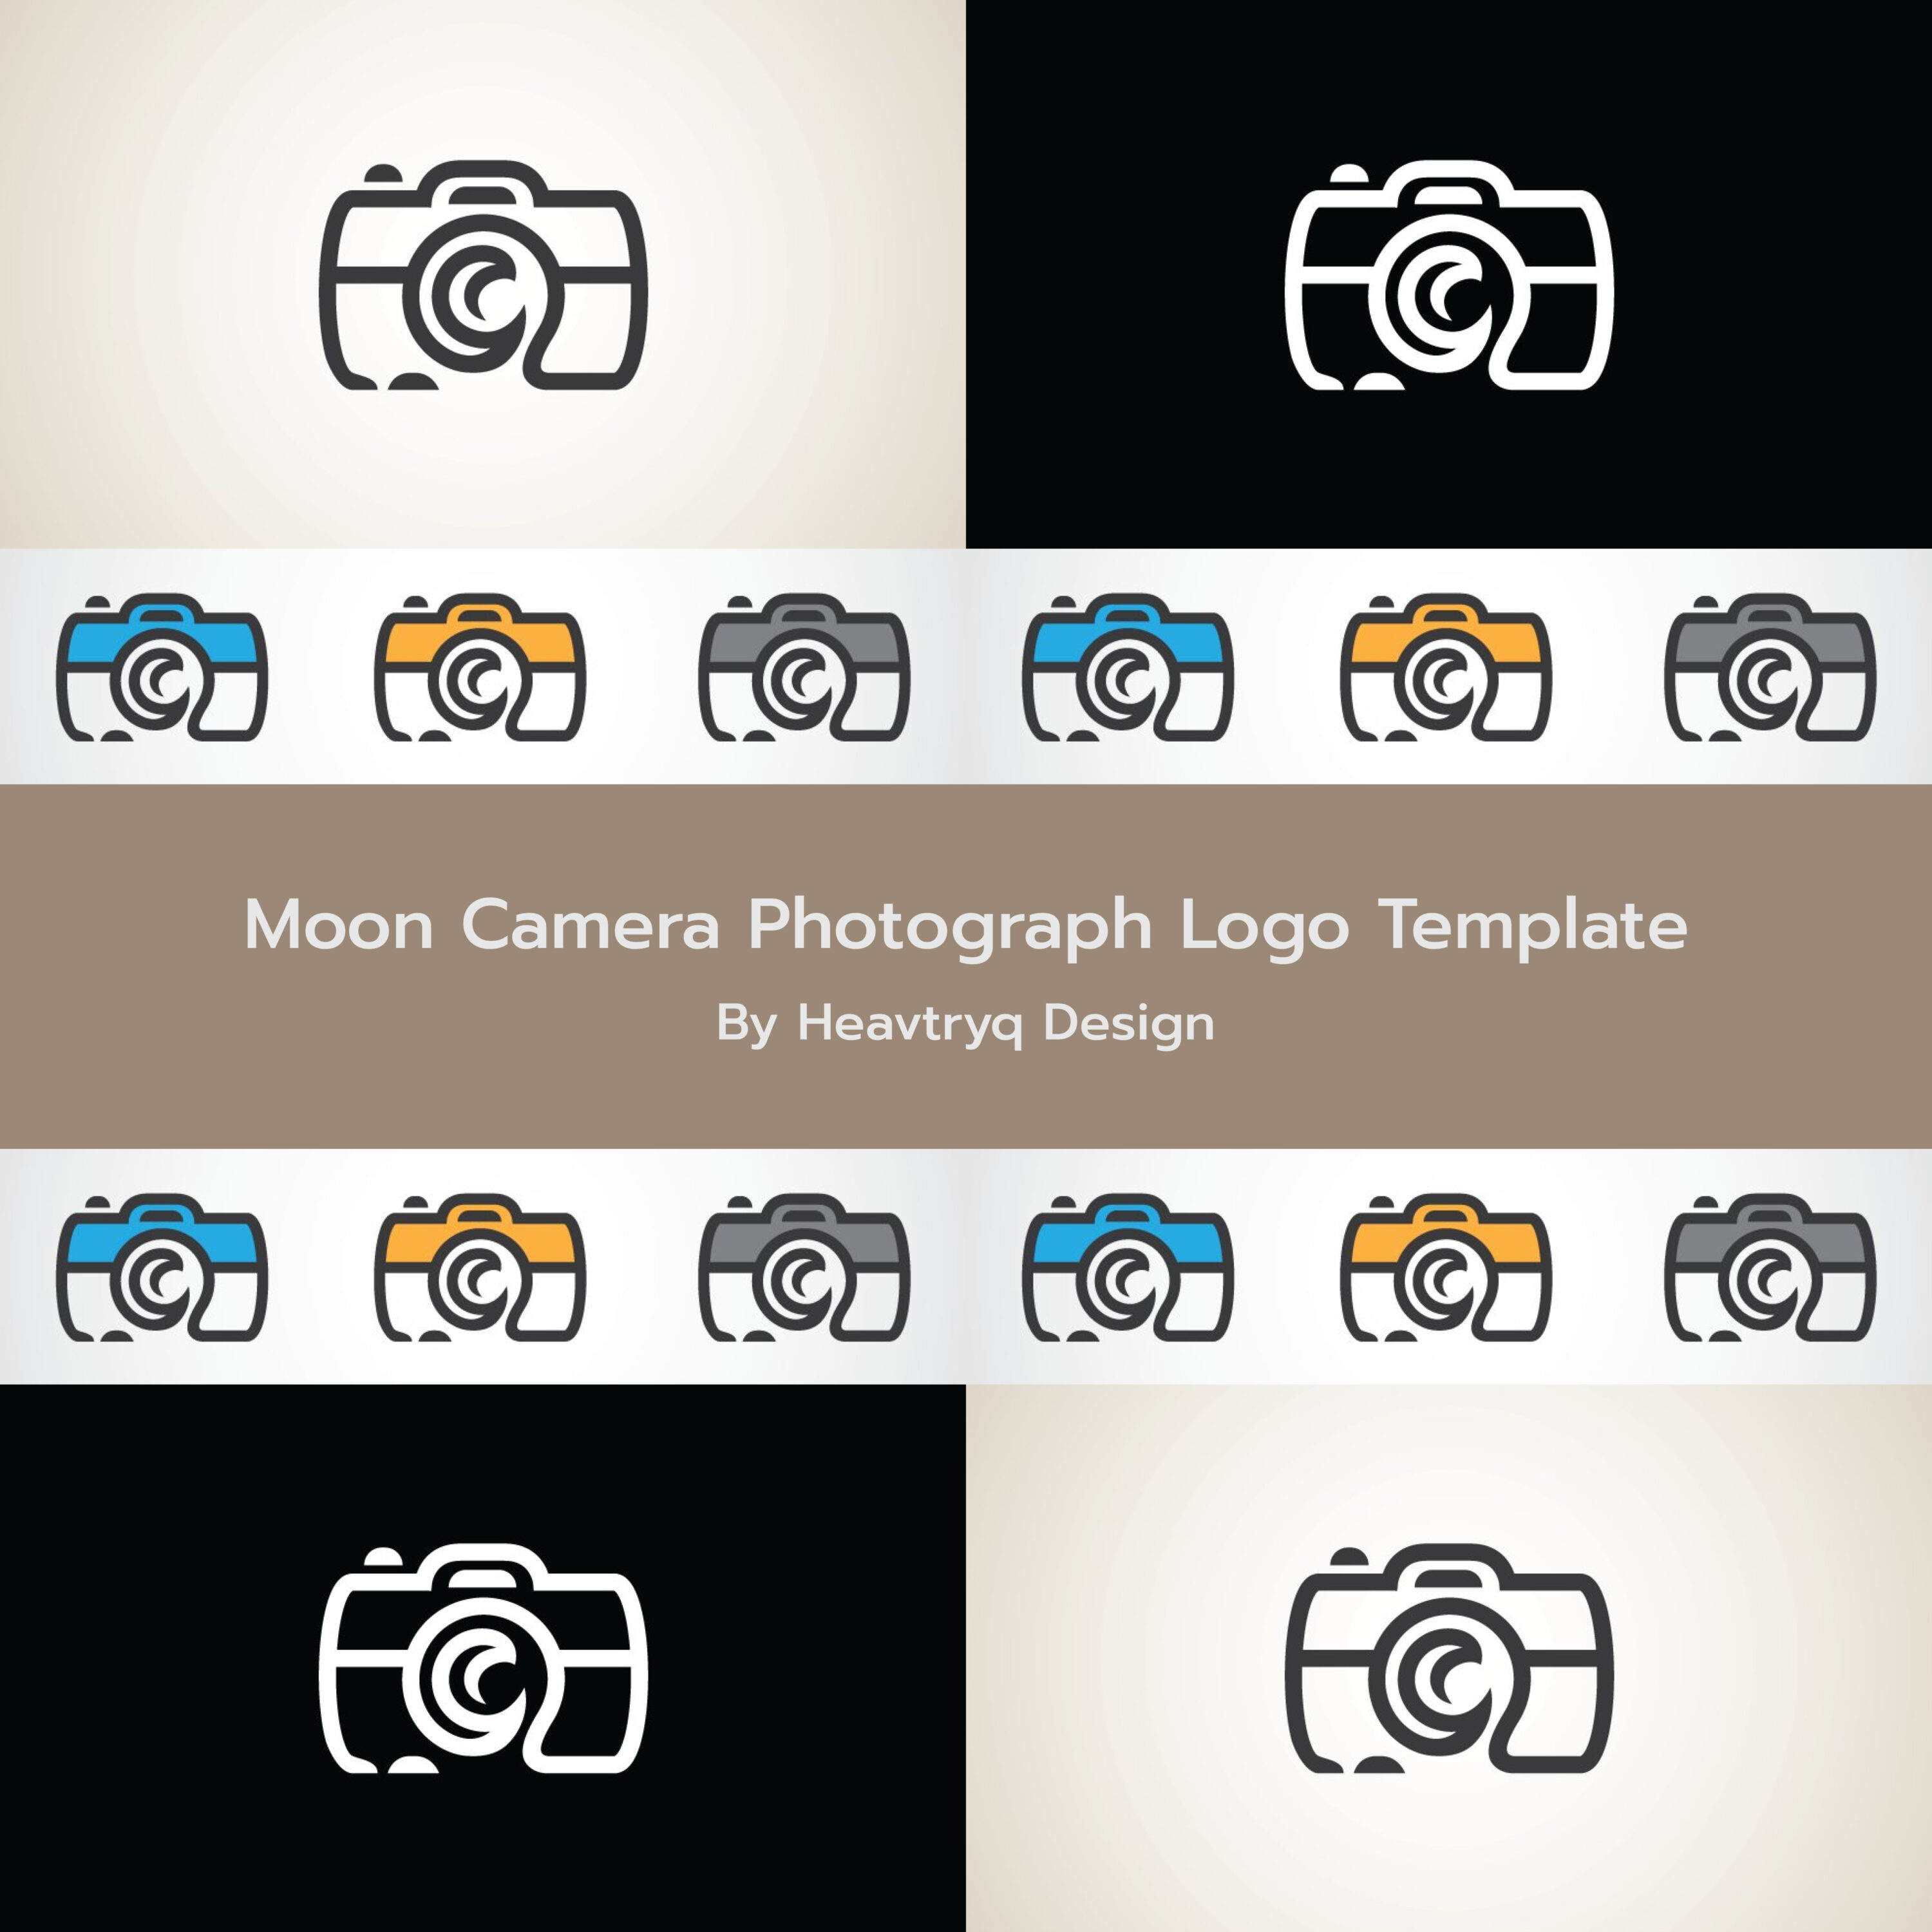 Preview moon camera photograph logo template.